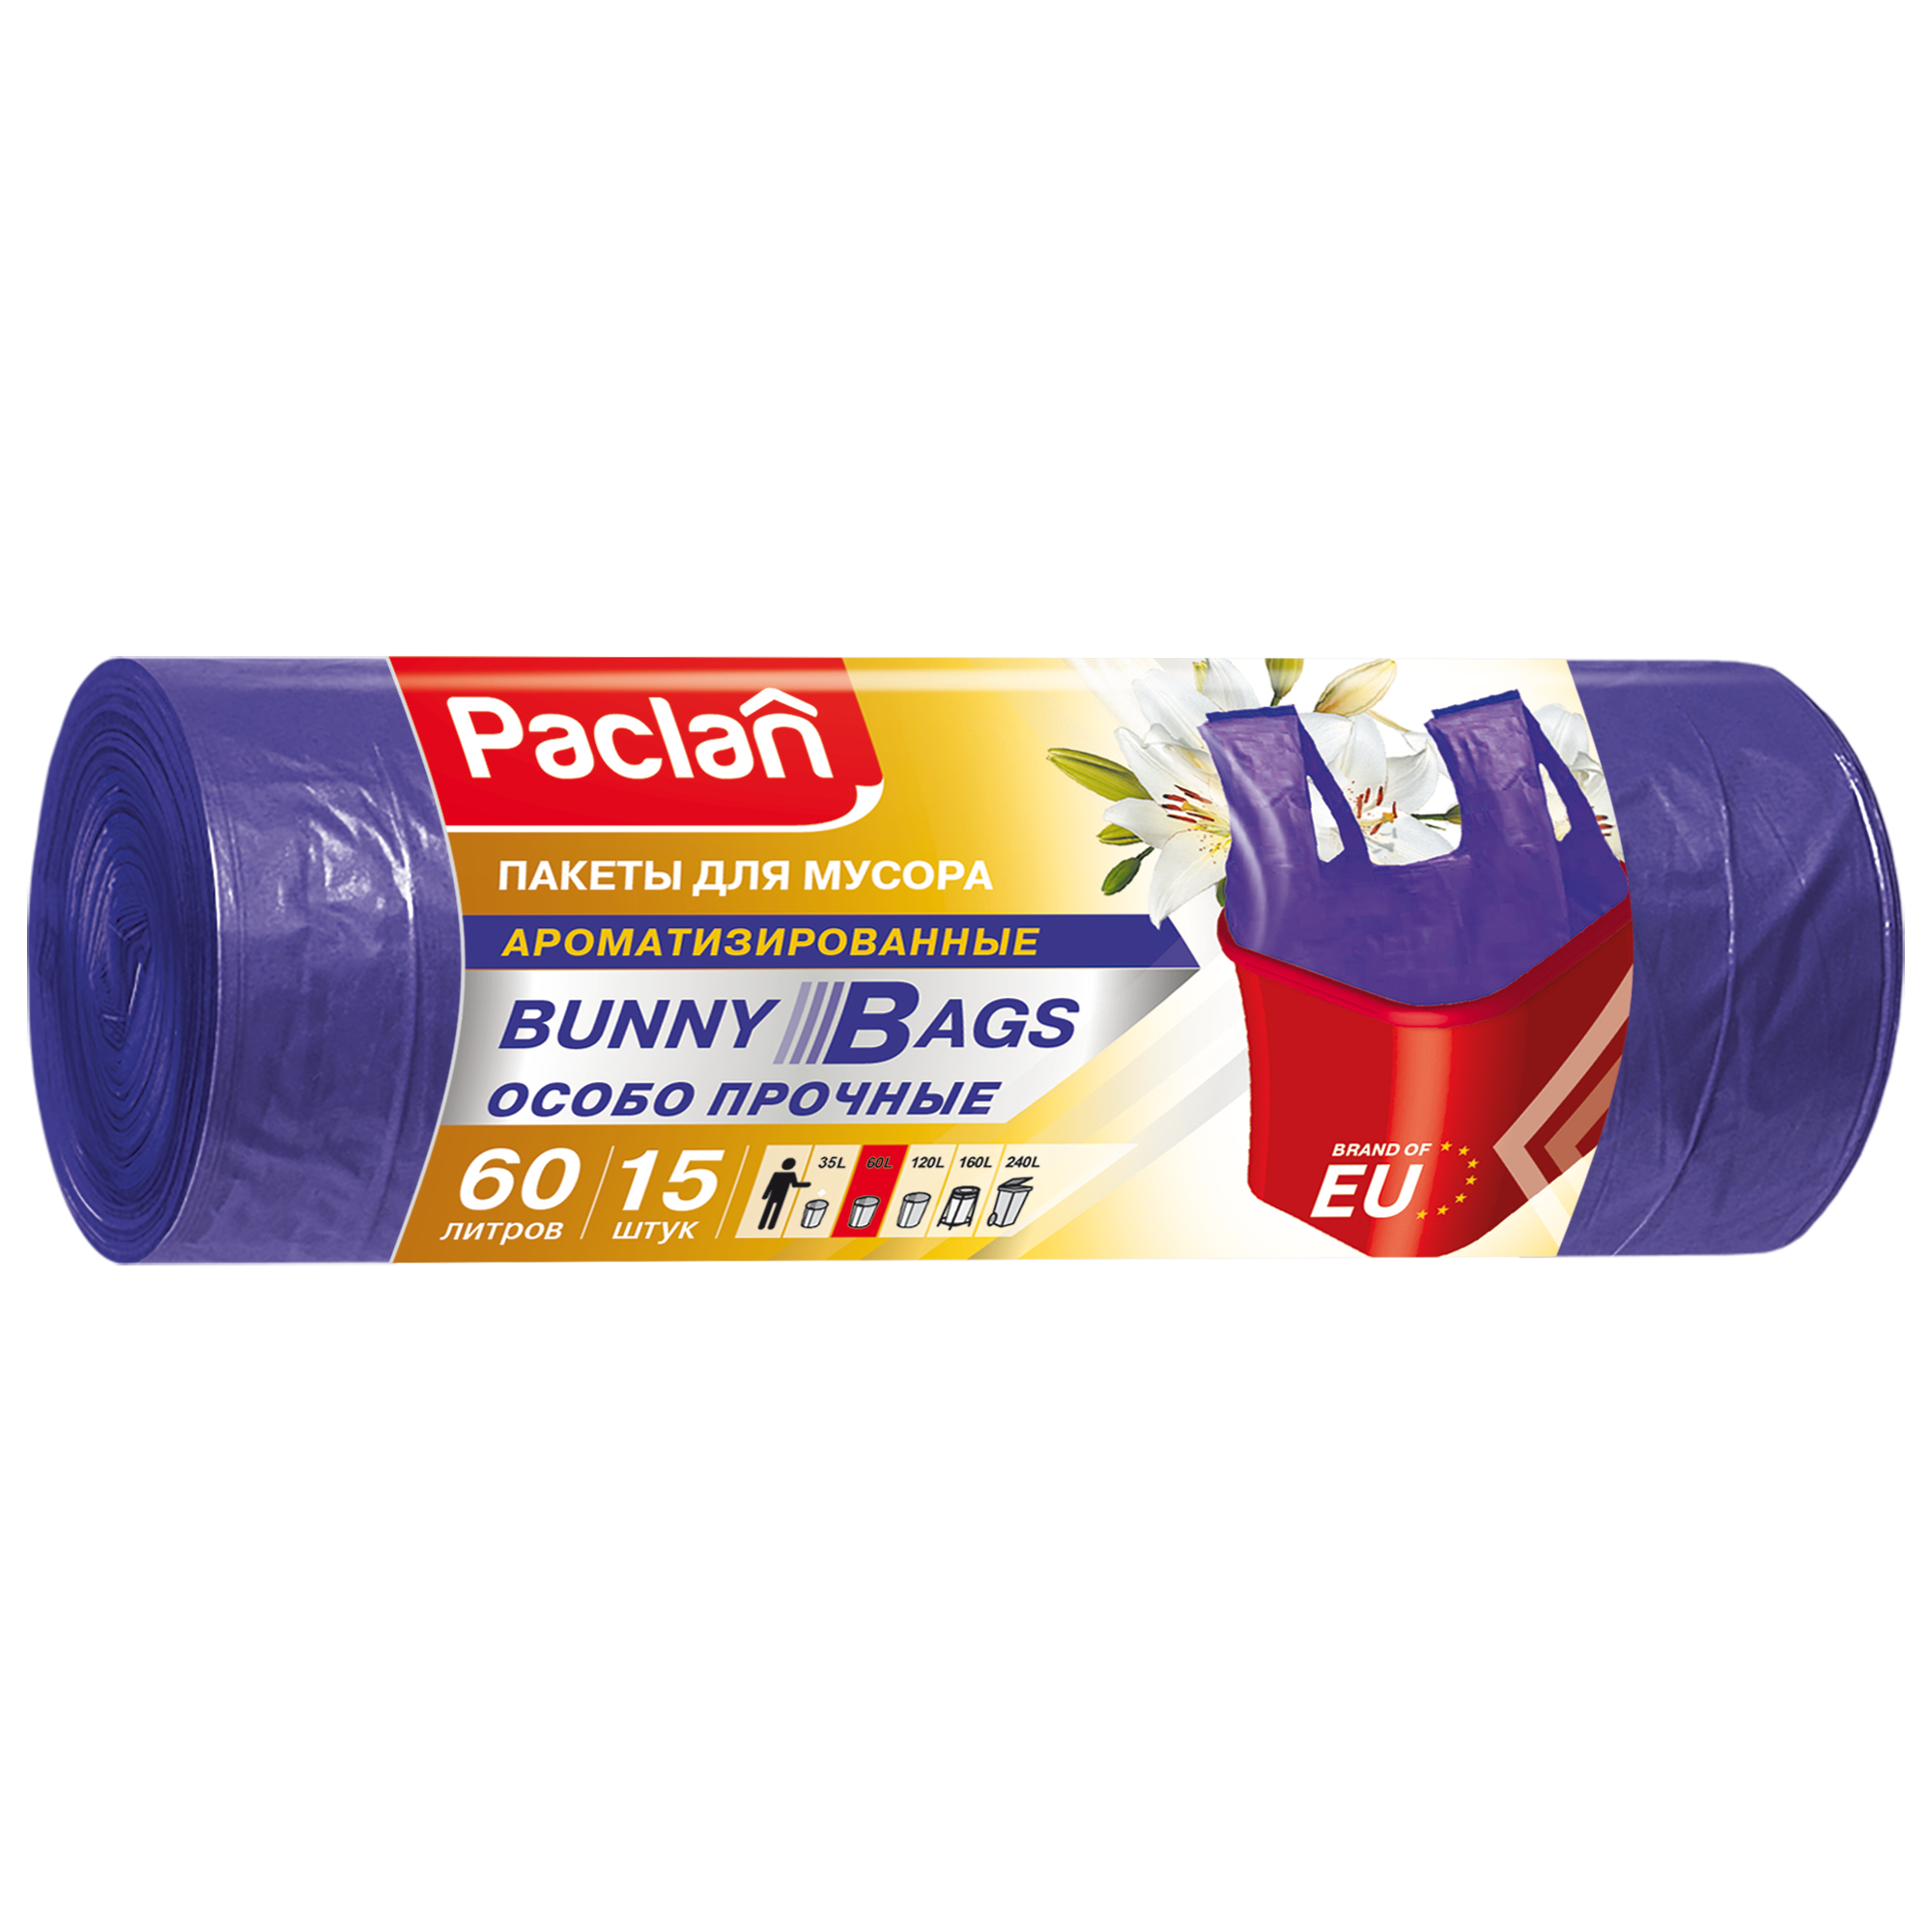 Мешки для мусора Paclan Bunny bags aroma 60 л 15 шт мешок для мусора paclan bunny bags aroma мешки для мусора с ручками 35л